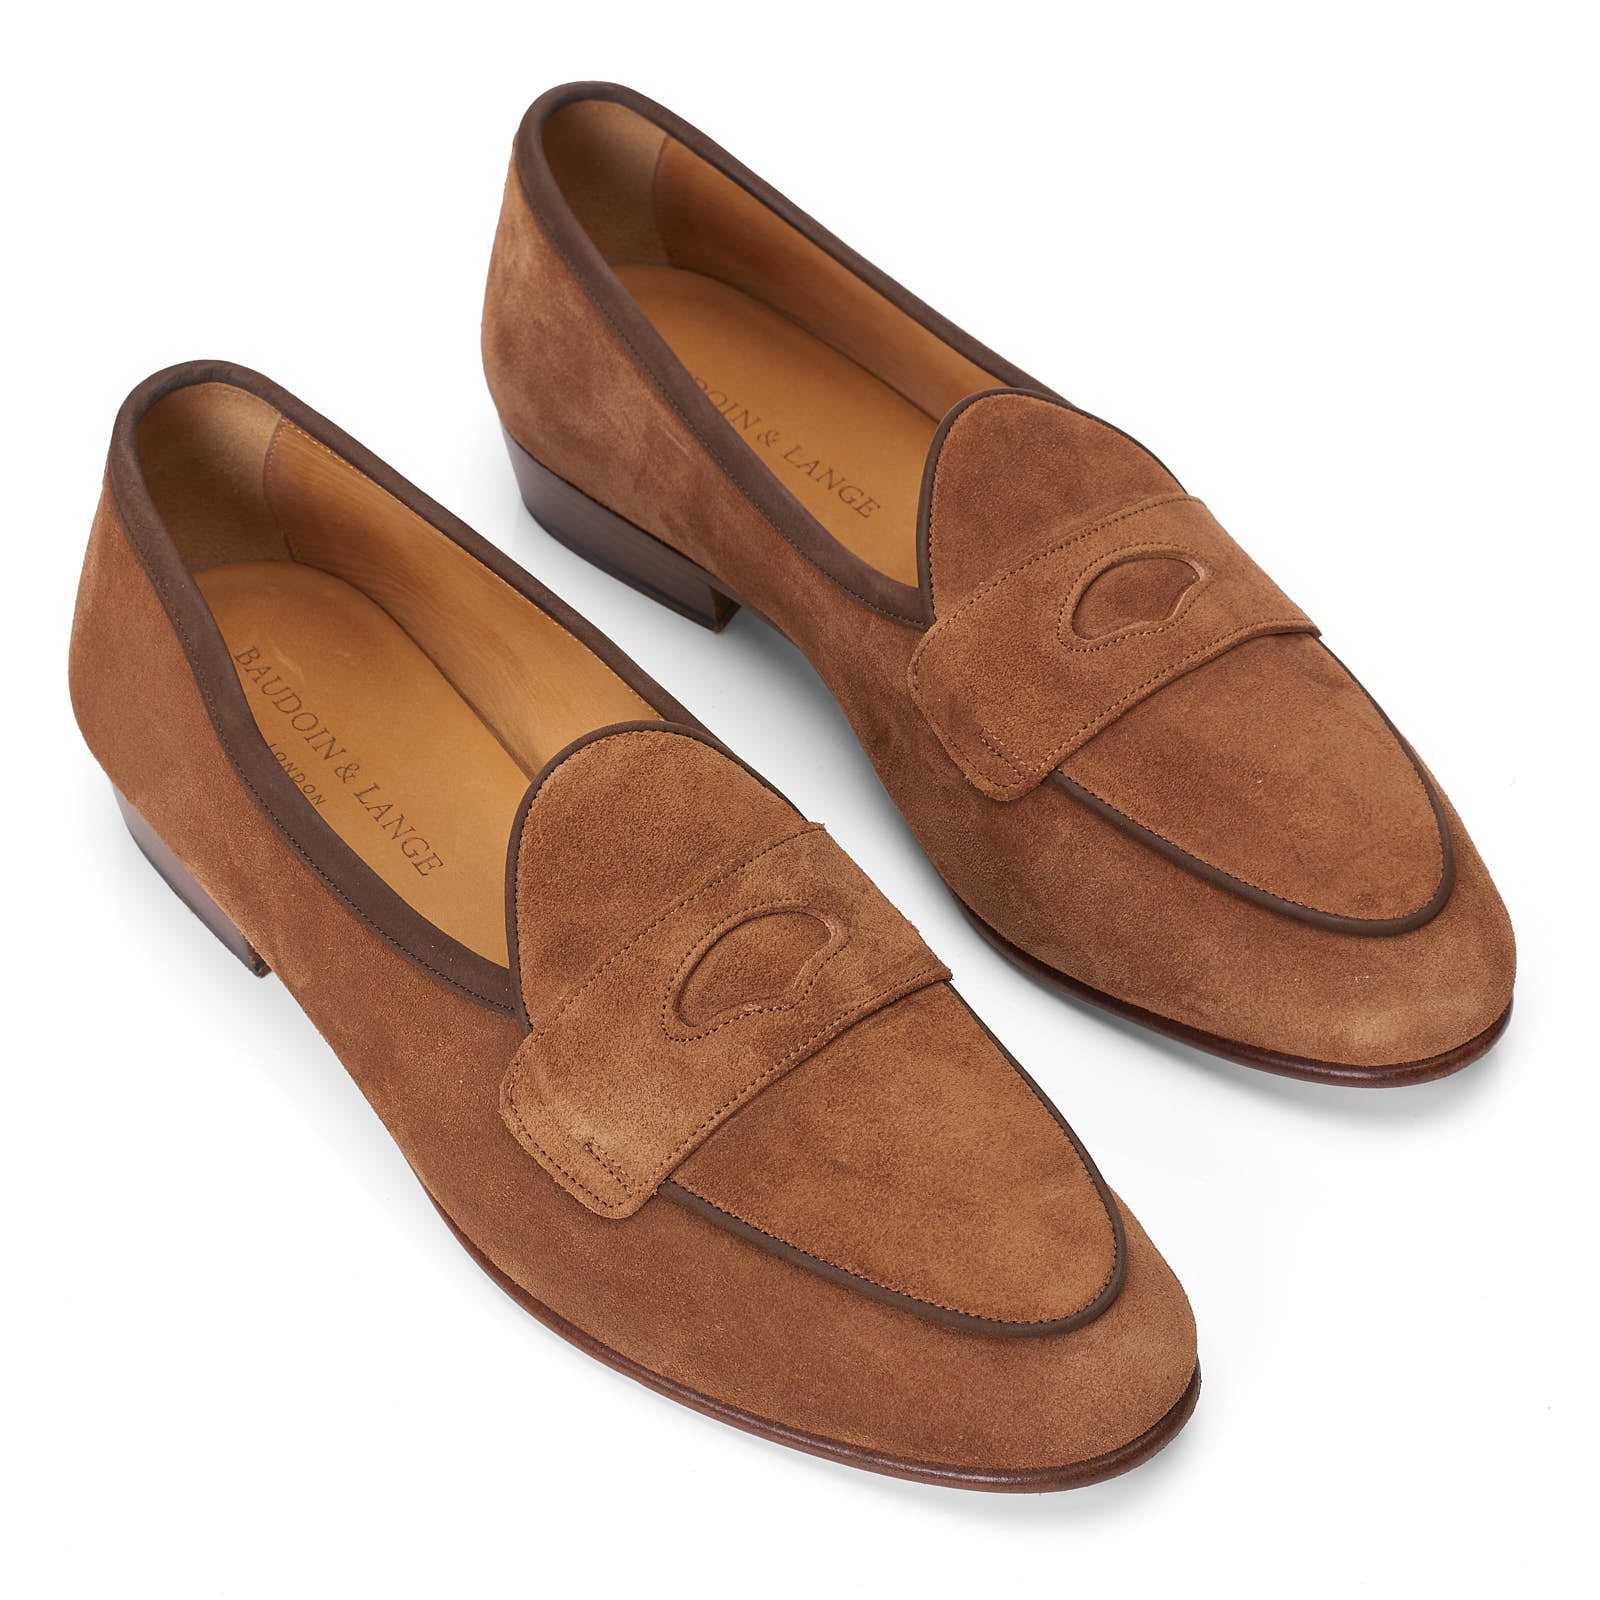 BAUDOIN & LANGE Grand Fenelon Tan Noble Suede Leather Penny Loafer Shoes EU 40 US 7